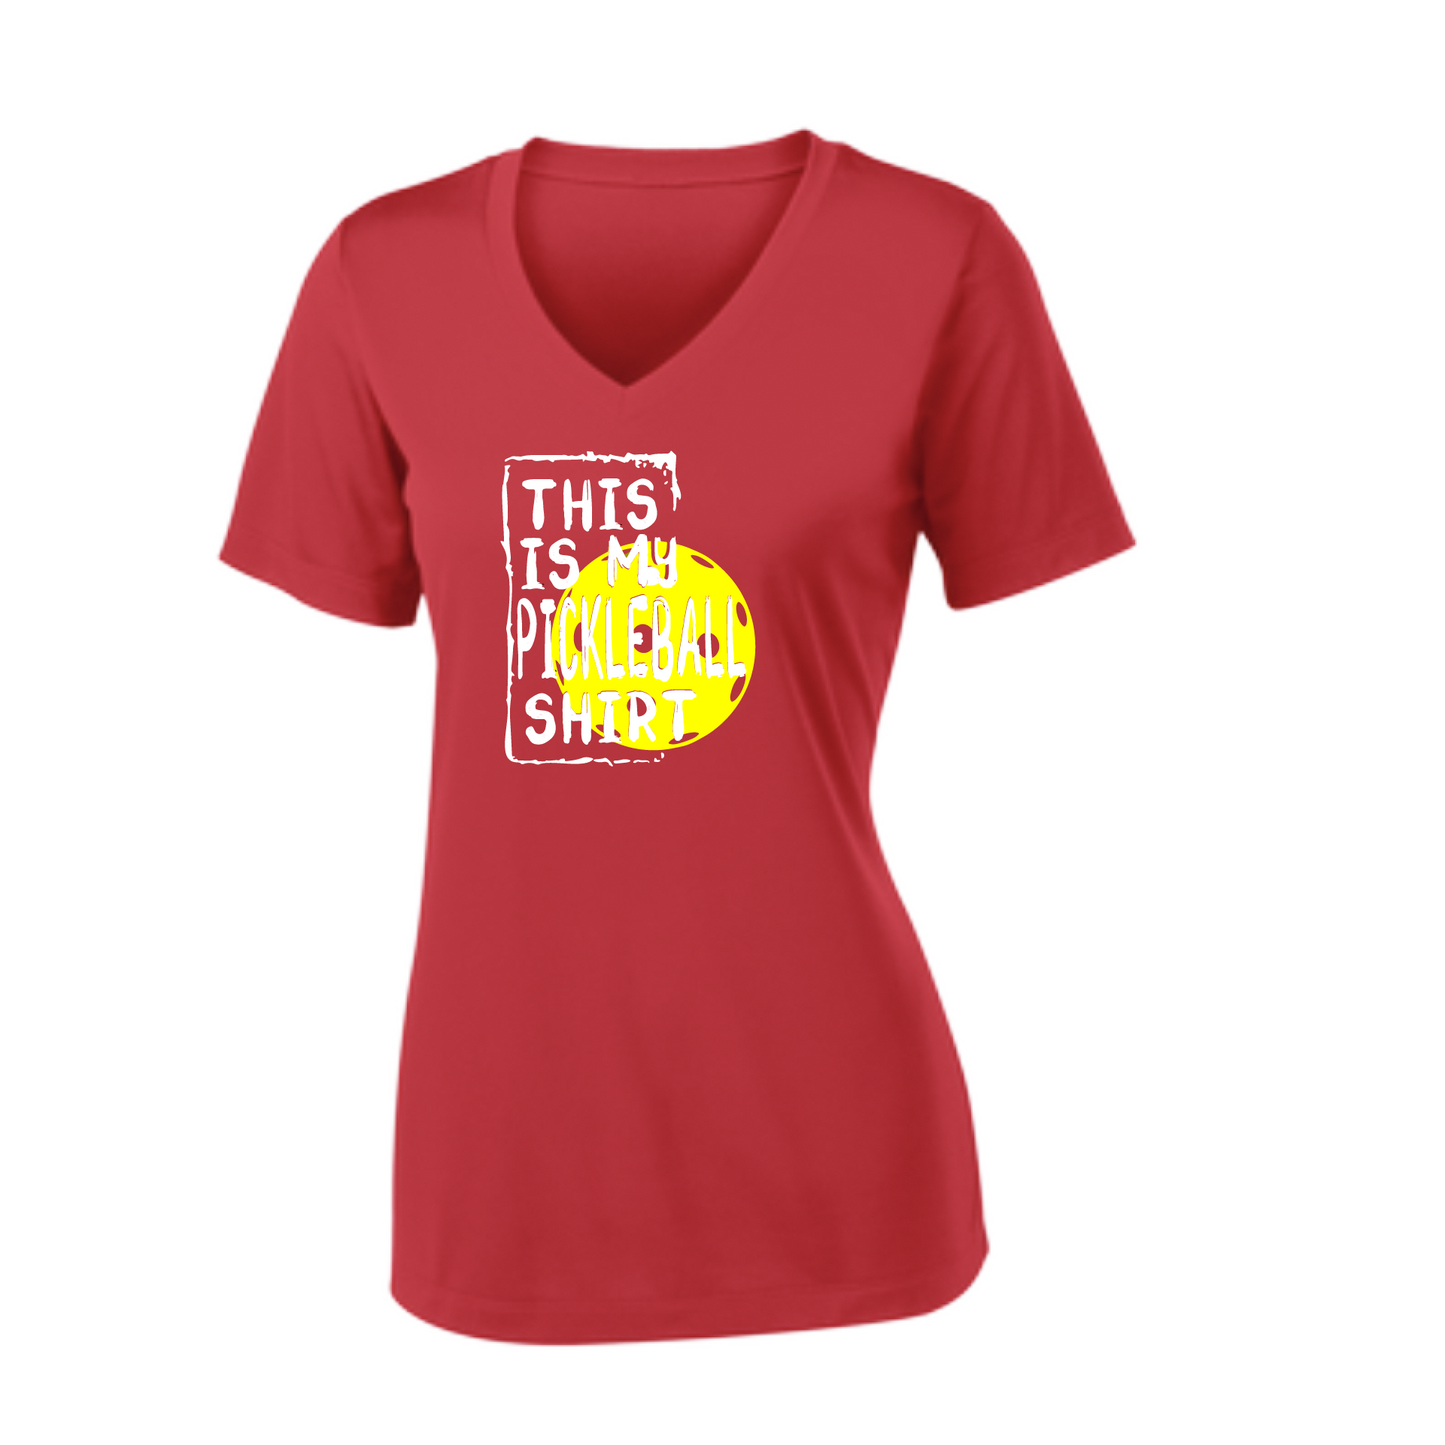 This Is My Pickleball Shirt | Women’s Short Sleeve V-Neck Shirt | 100% Polyester